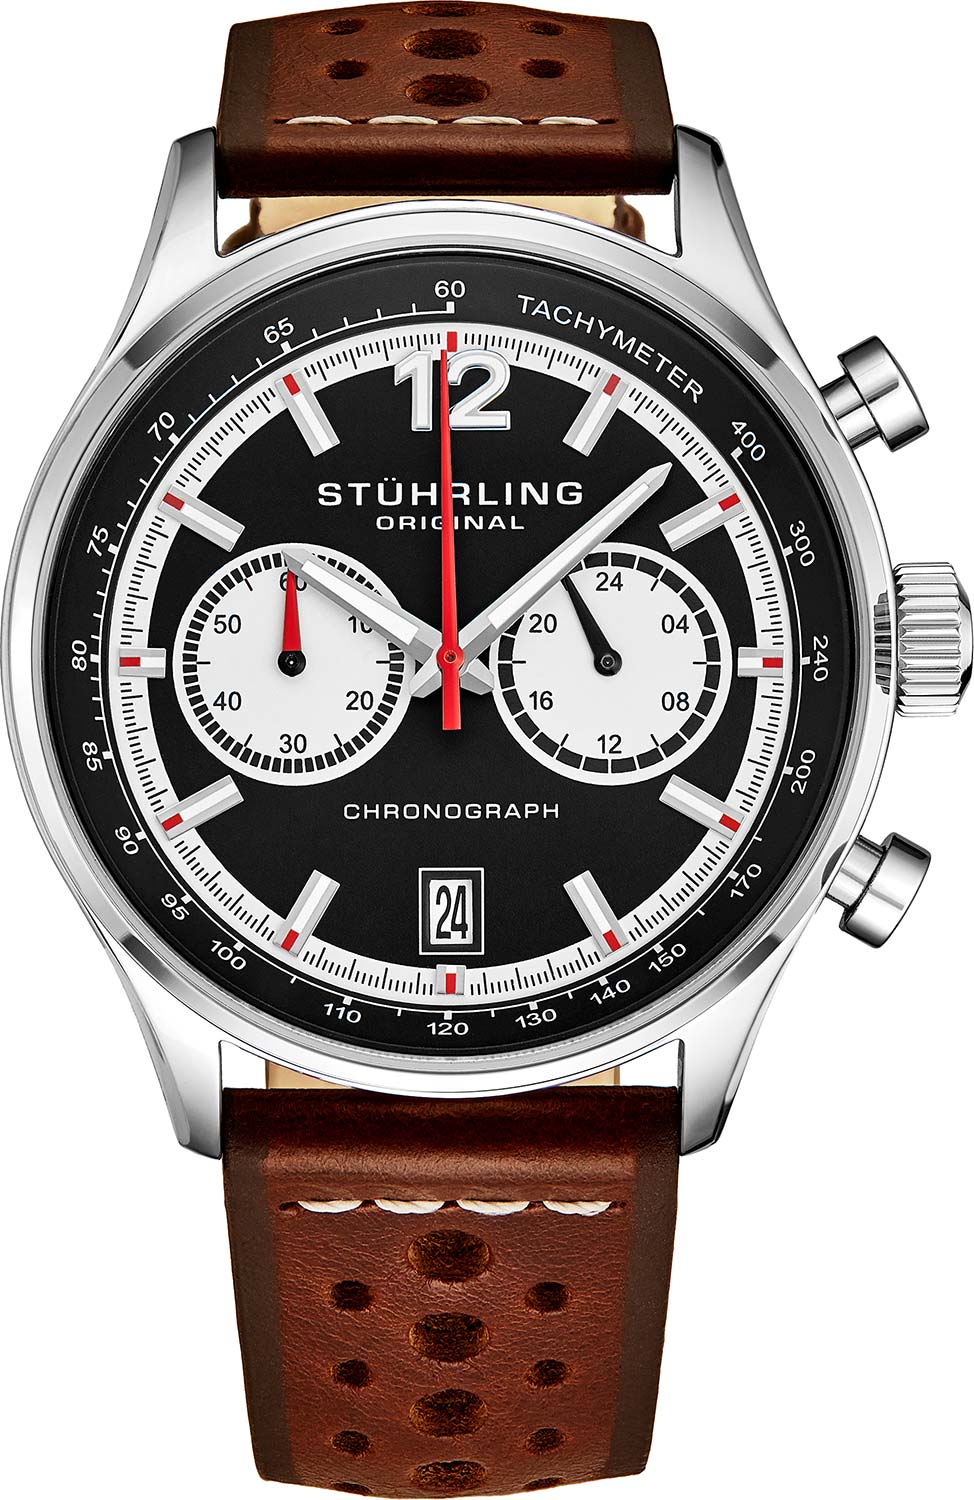 Наручные часы Stuhrling 933.02 с хронографом